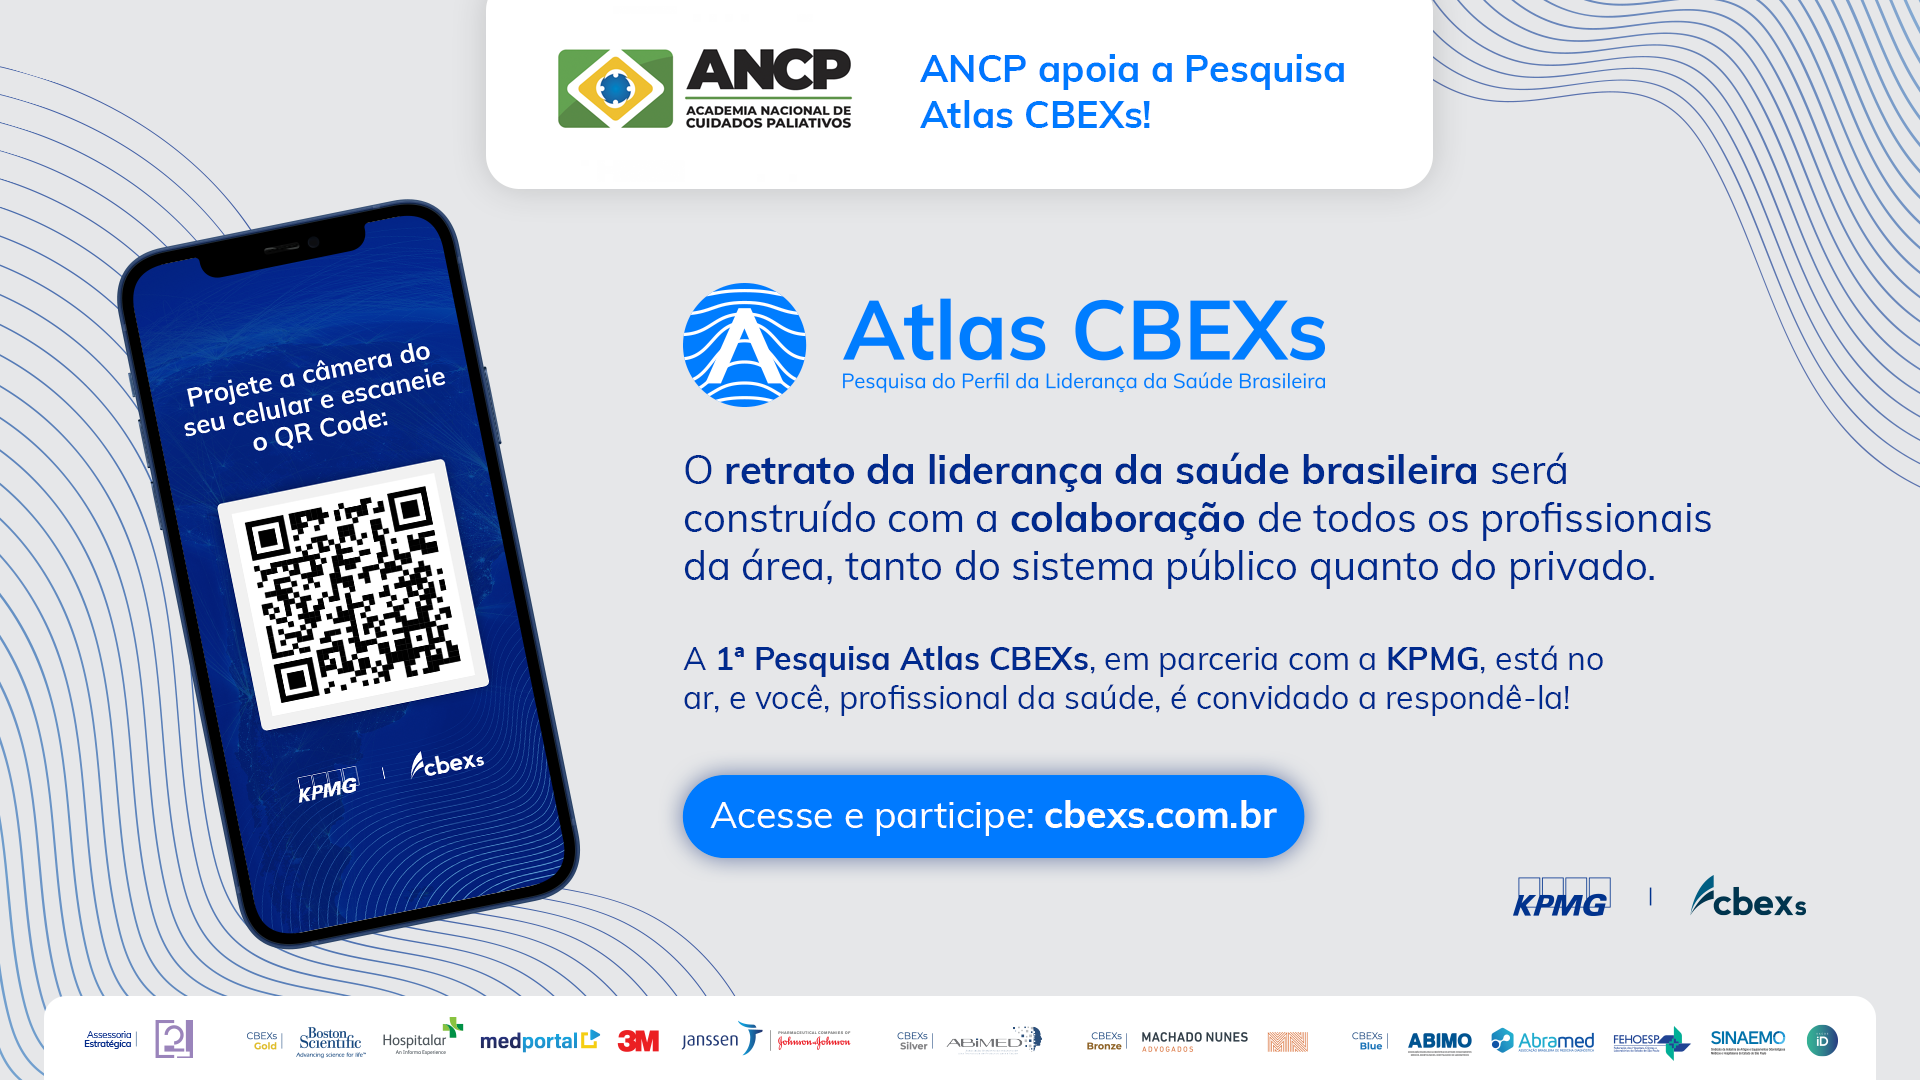 ANCP apoia a Pesquisa Atlas CBEXs